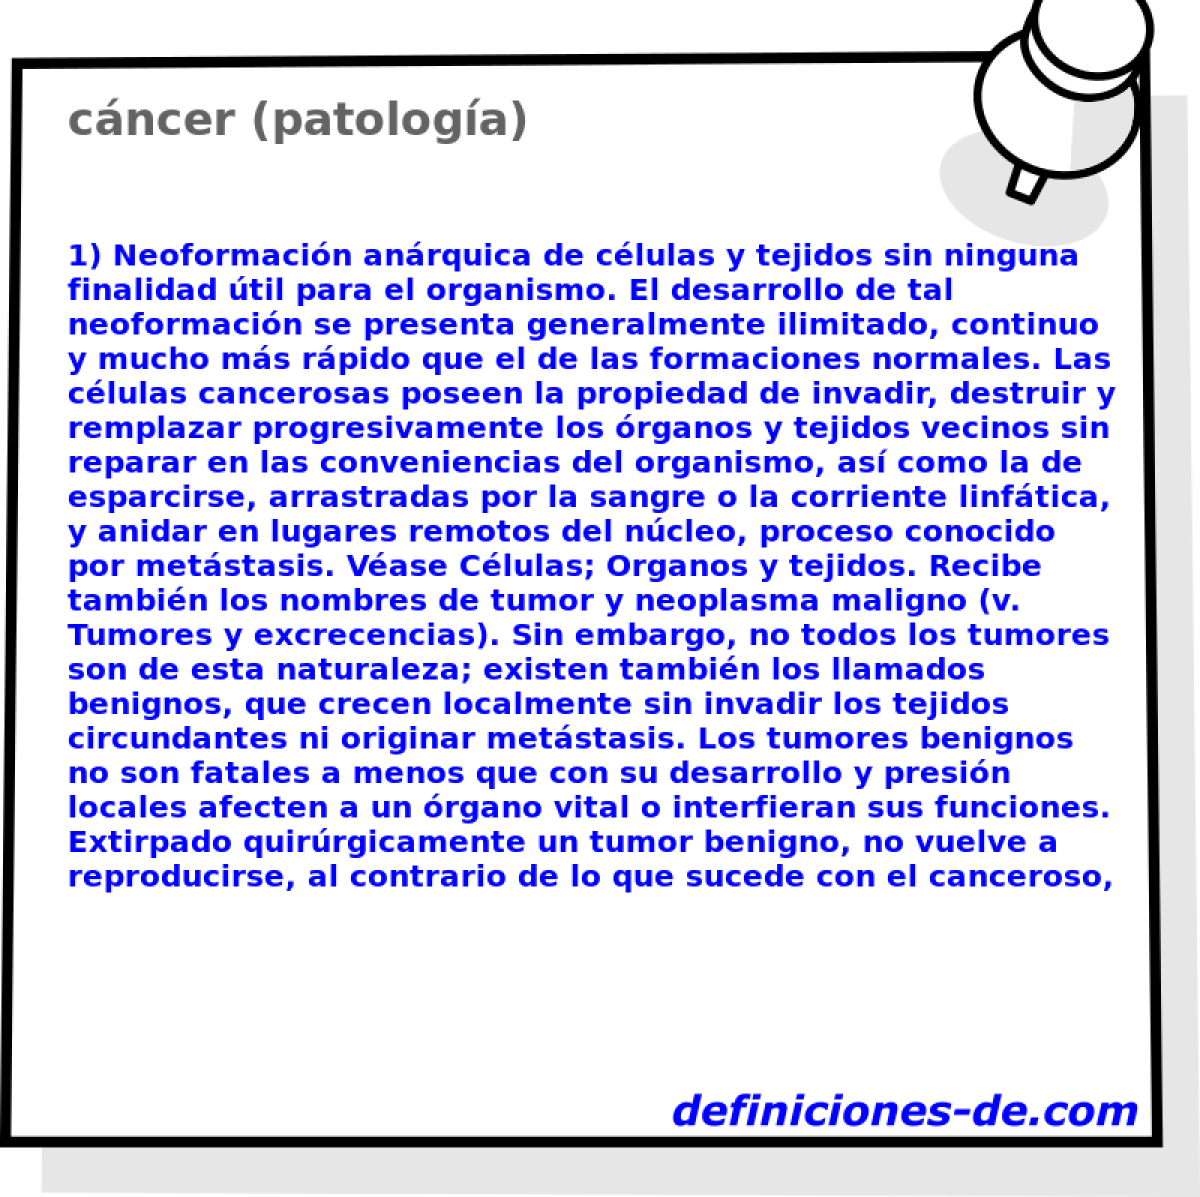 cncer (patologa) 